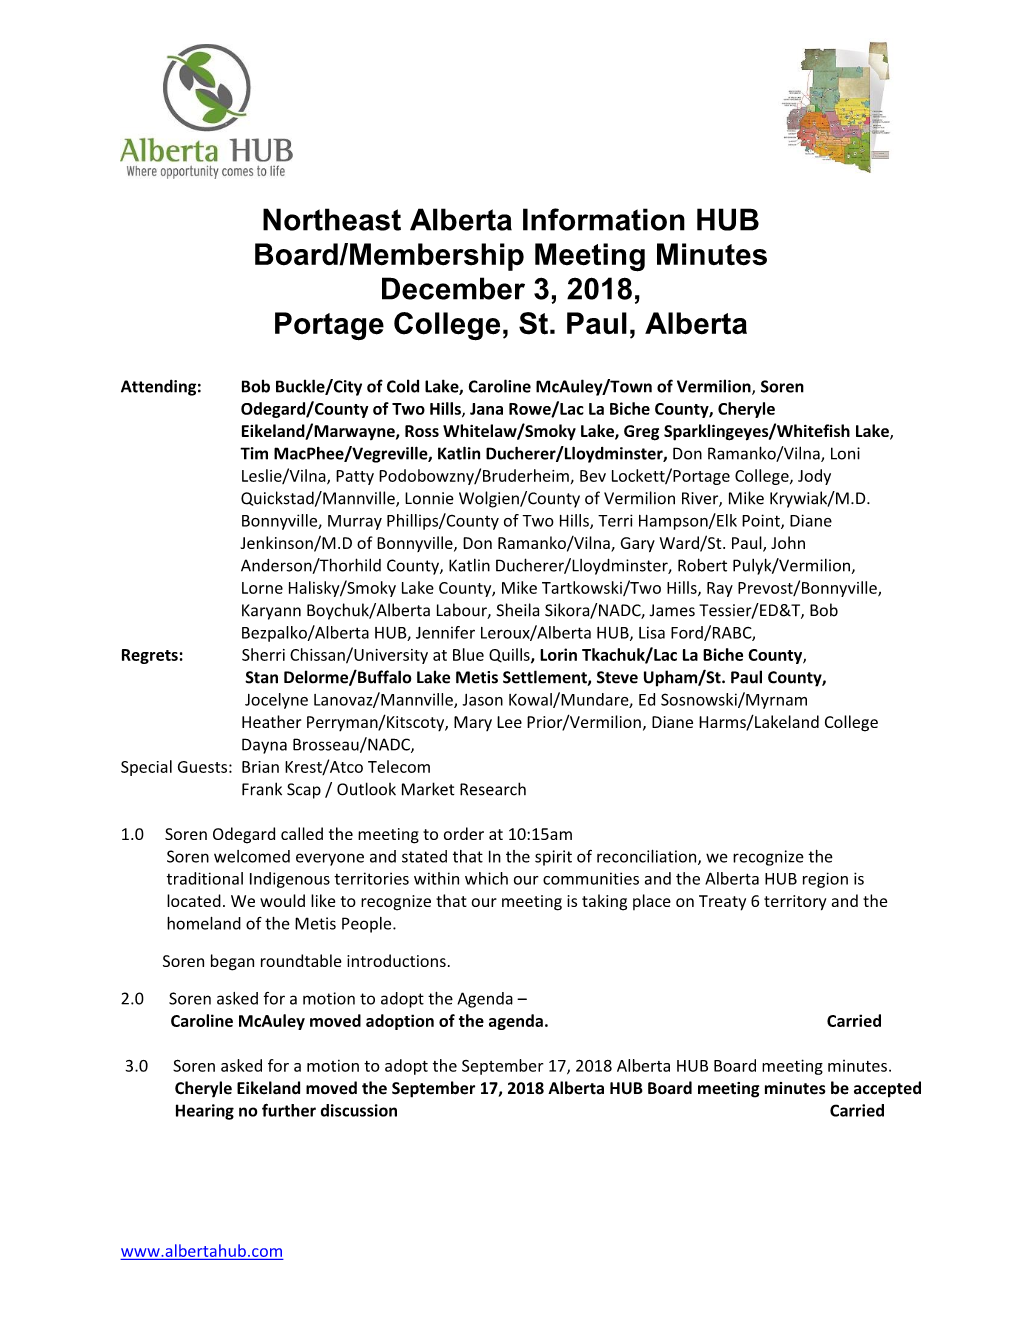 Northeast Alberta Information HUB Board/Membership Meeting Minutes December 3, 2018, Portage College, St